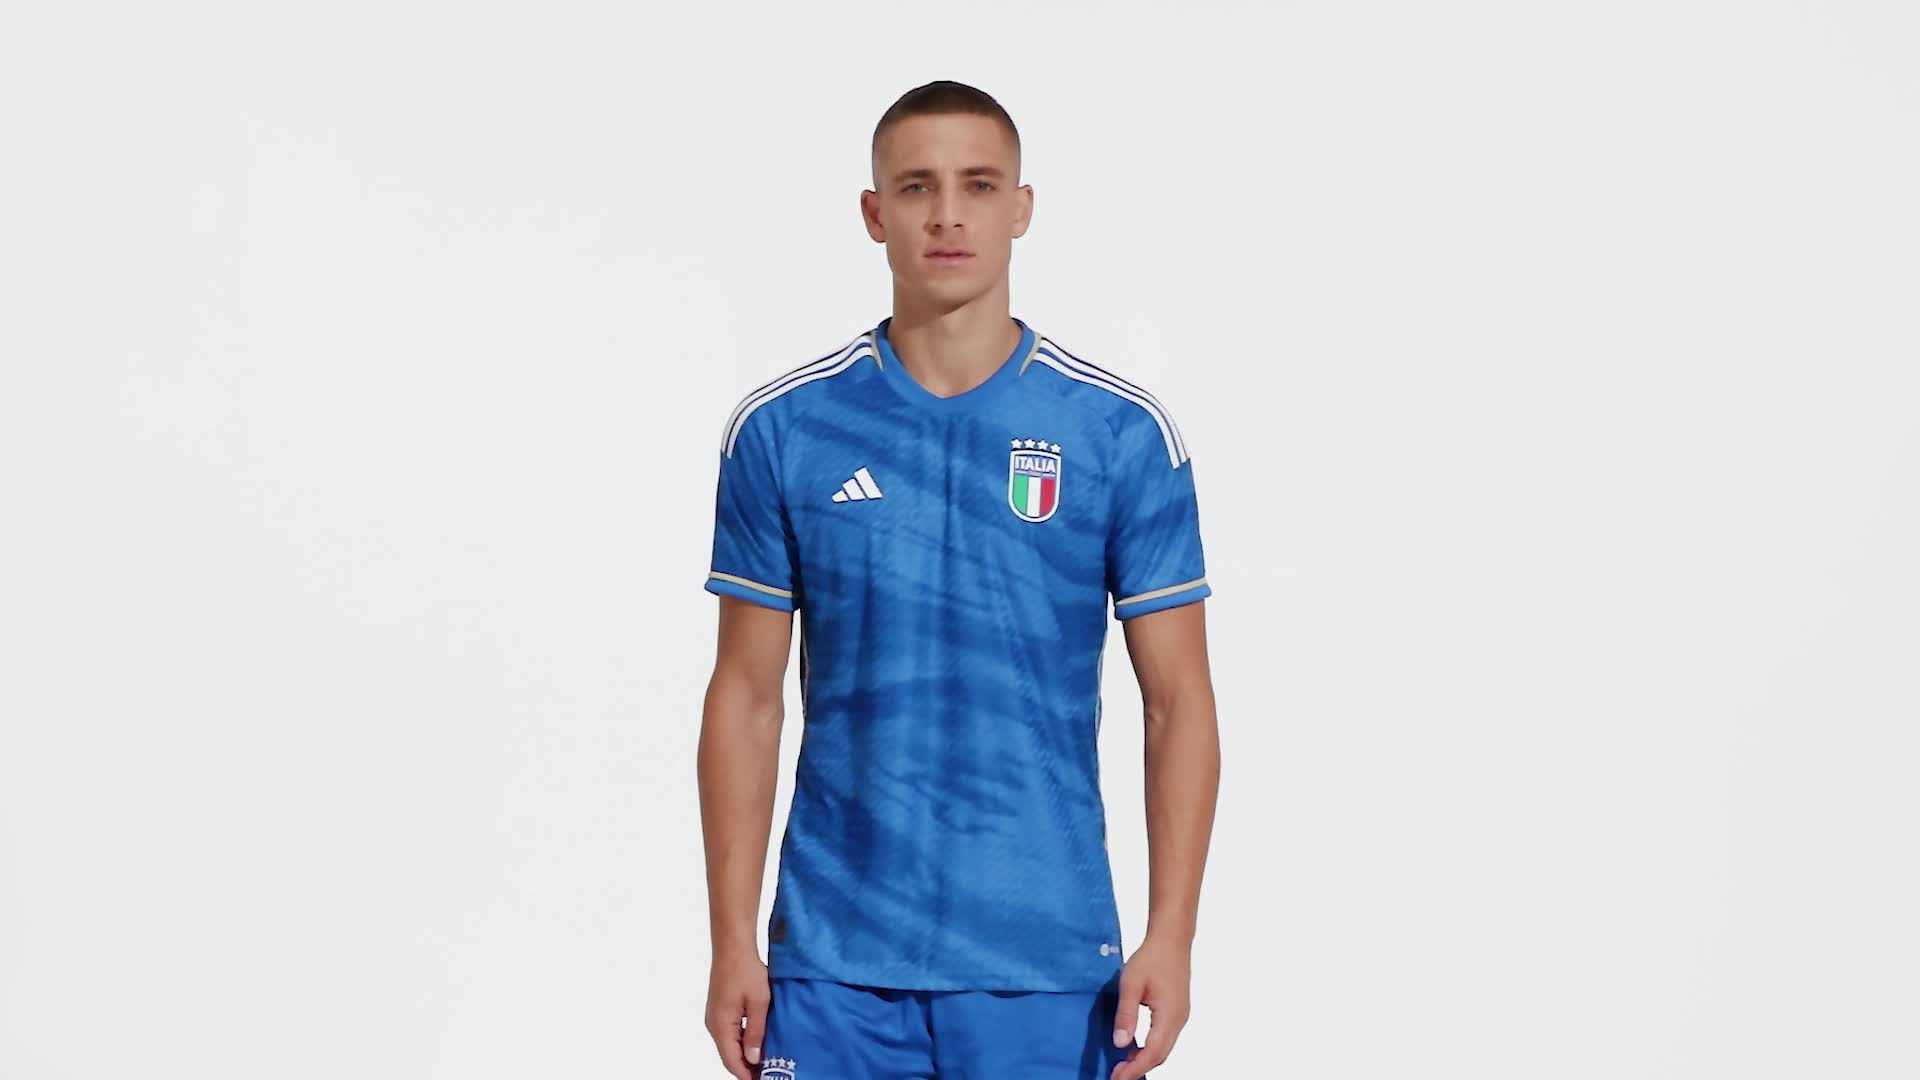 Men's Italy adidas Gear, Mens adidas Italy Apparel, Guys adidas Clothes